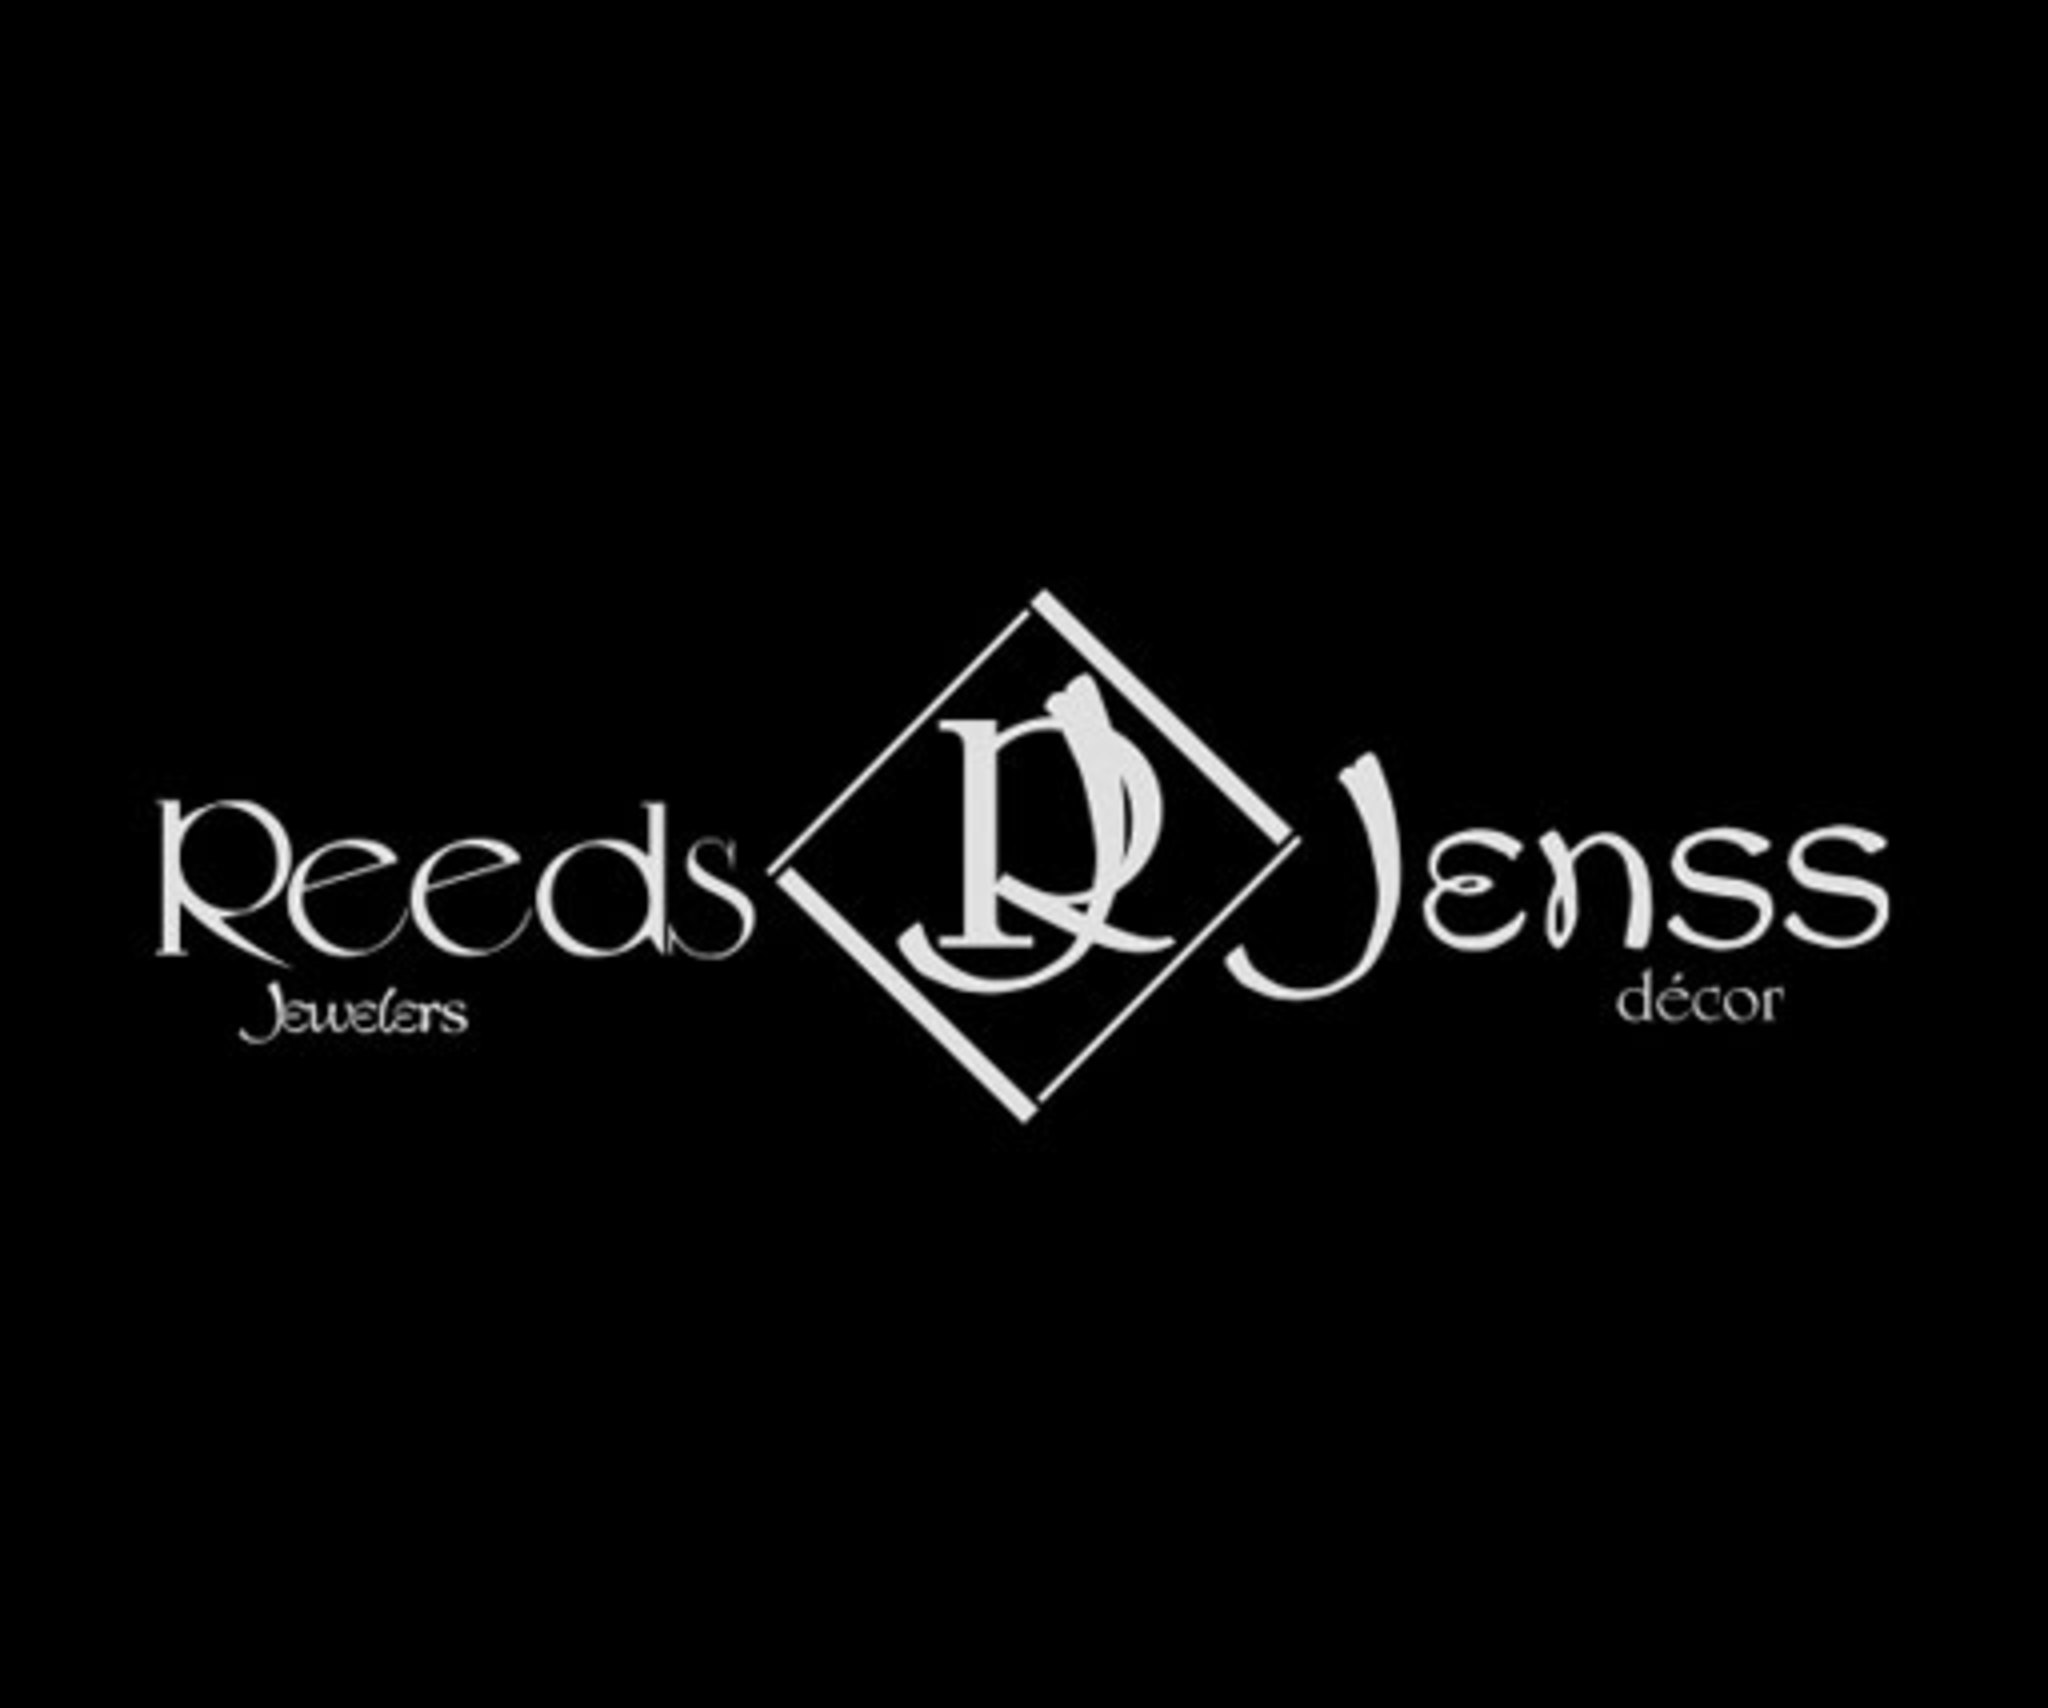 Reeds/Jenss